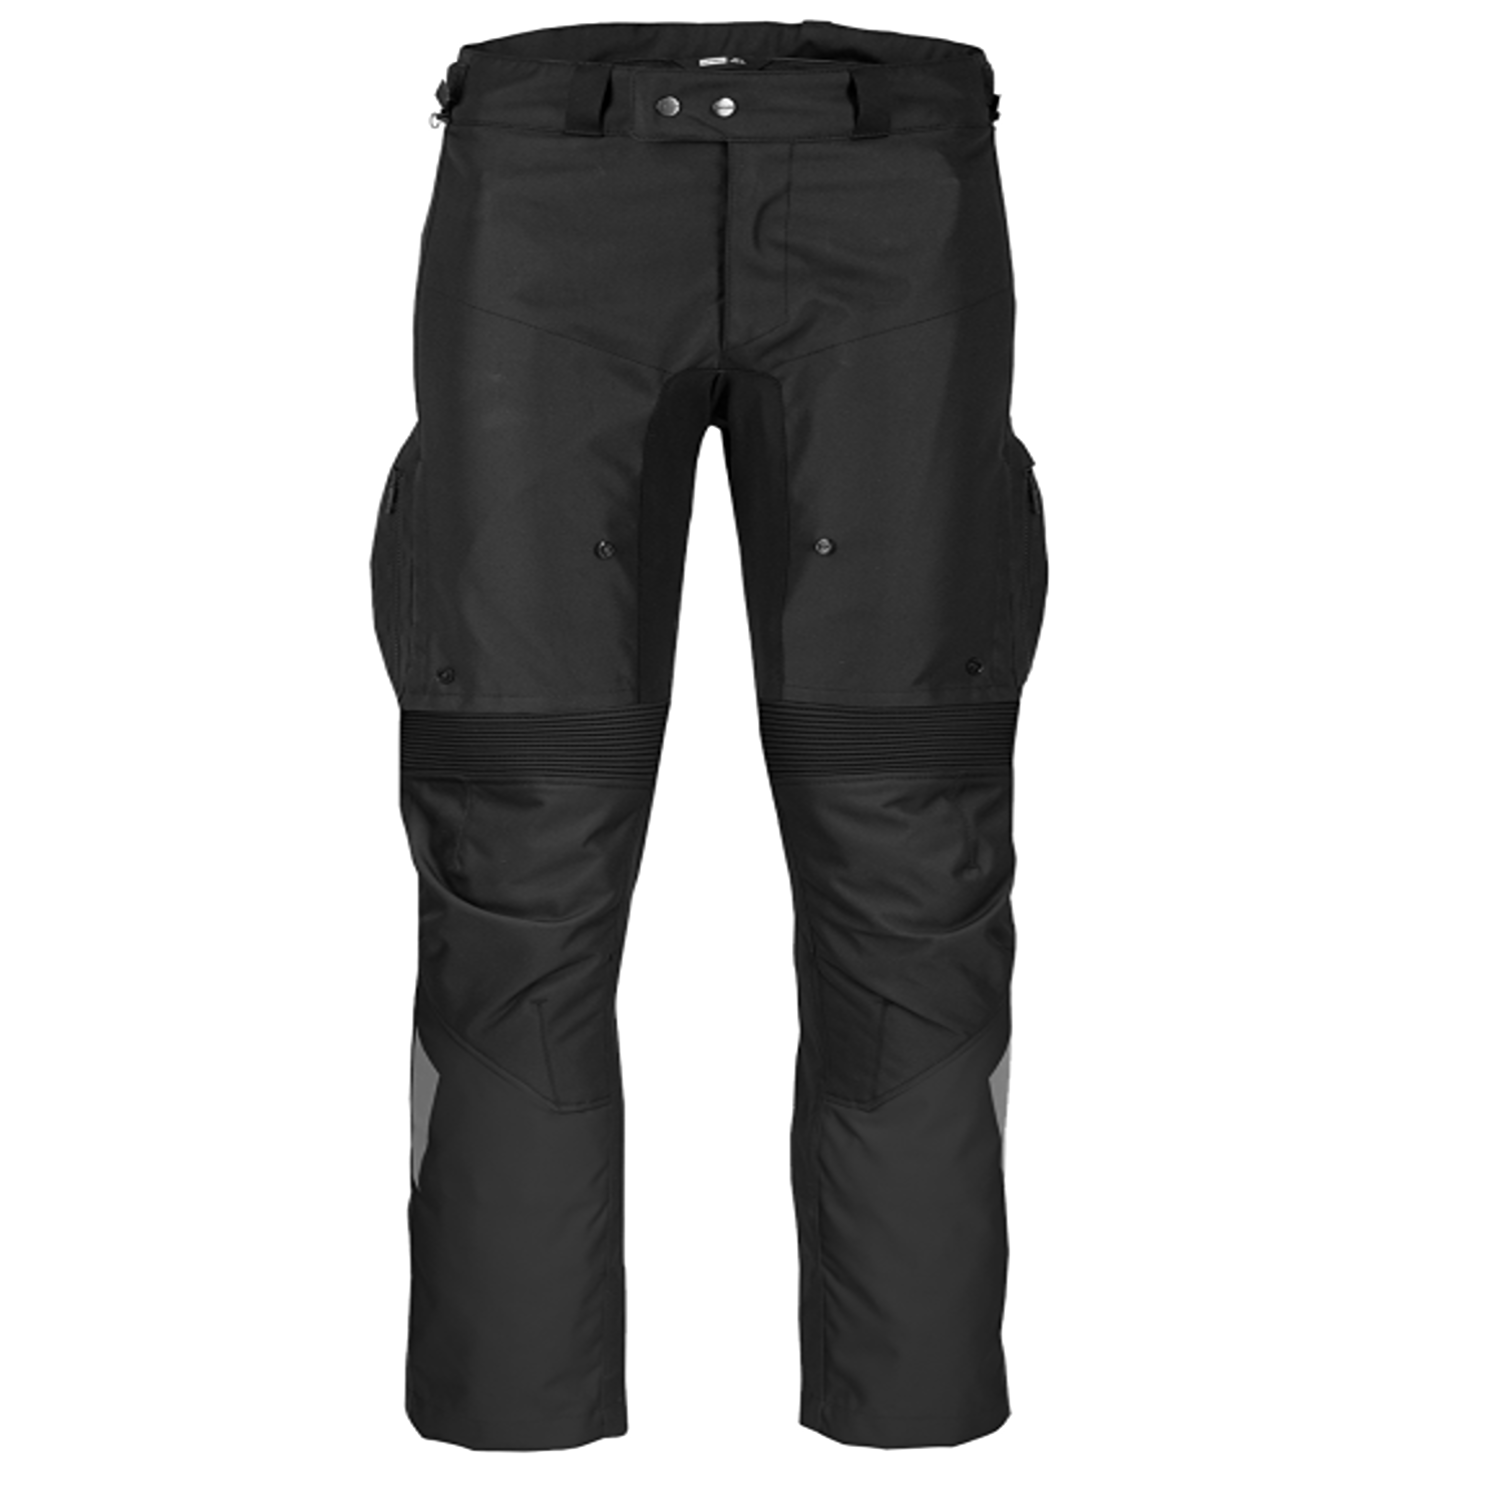 Image of EU Spidi Crossmaster Short Pants Black Taille XL